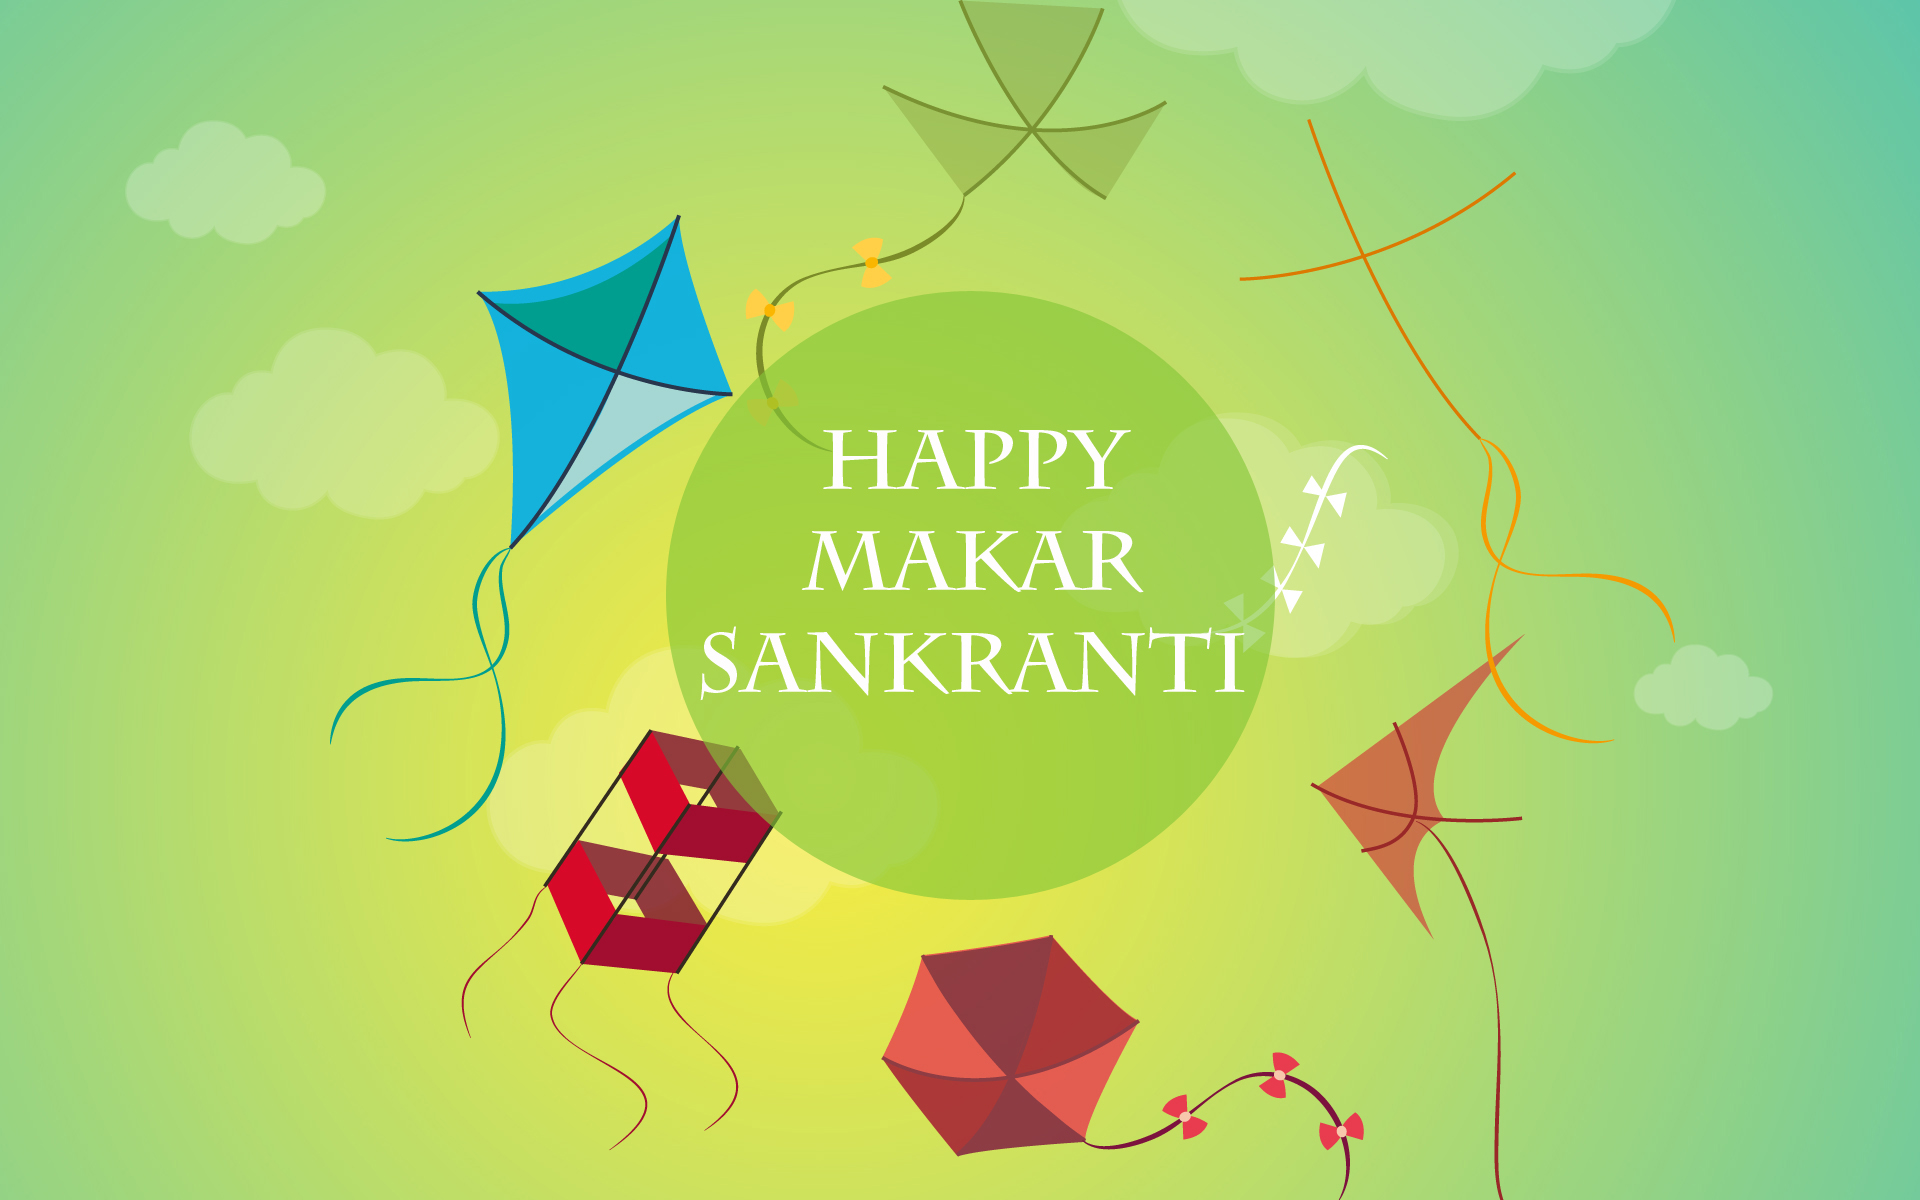 Makar Sankranti HD Images Photos And Wallpapers Free Download